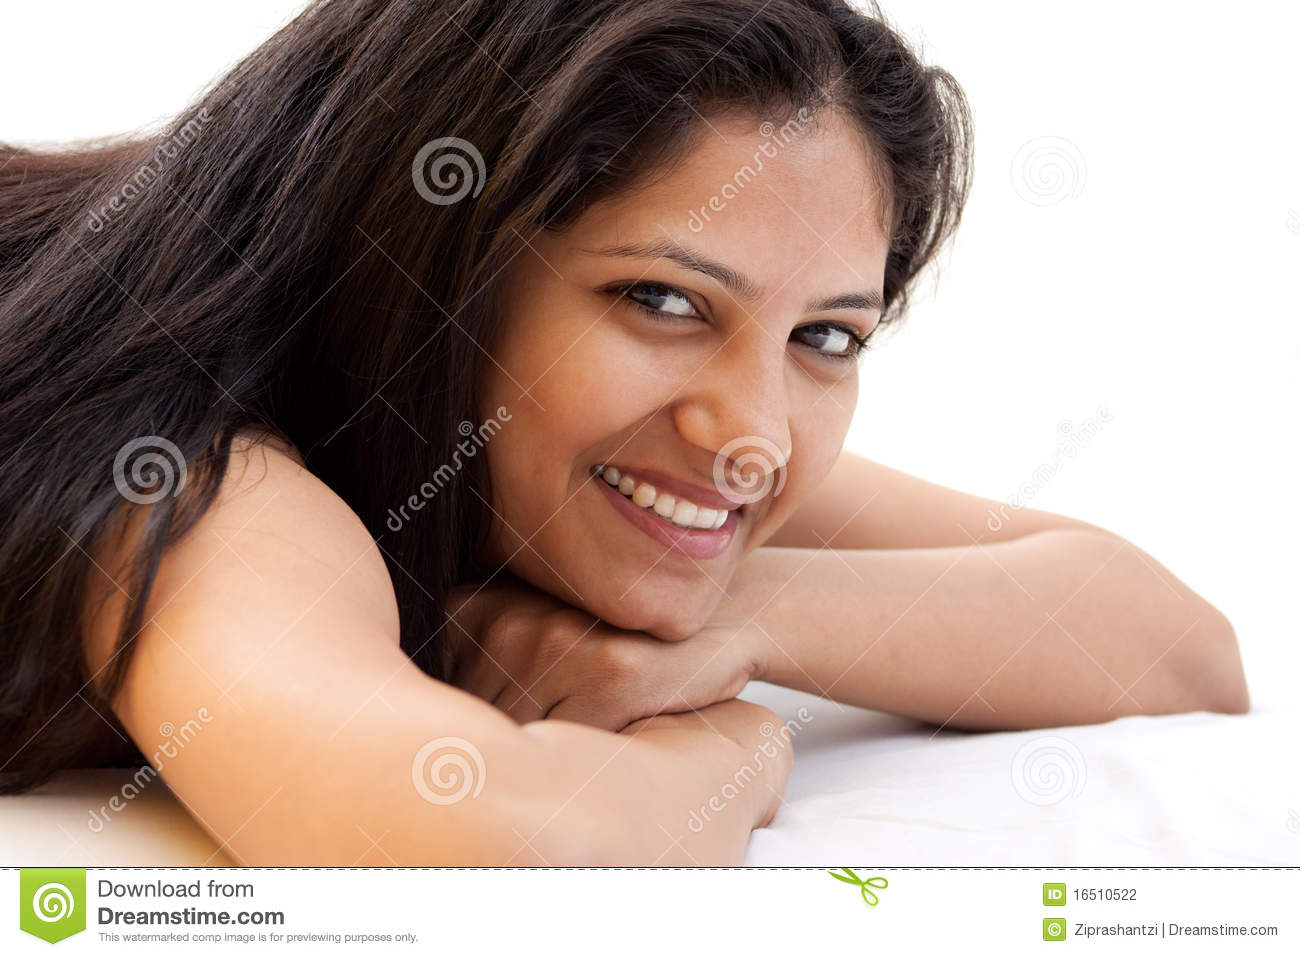 Shy Smile Of Beautiful Indian Girl Stock Photography   Image  16510522